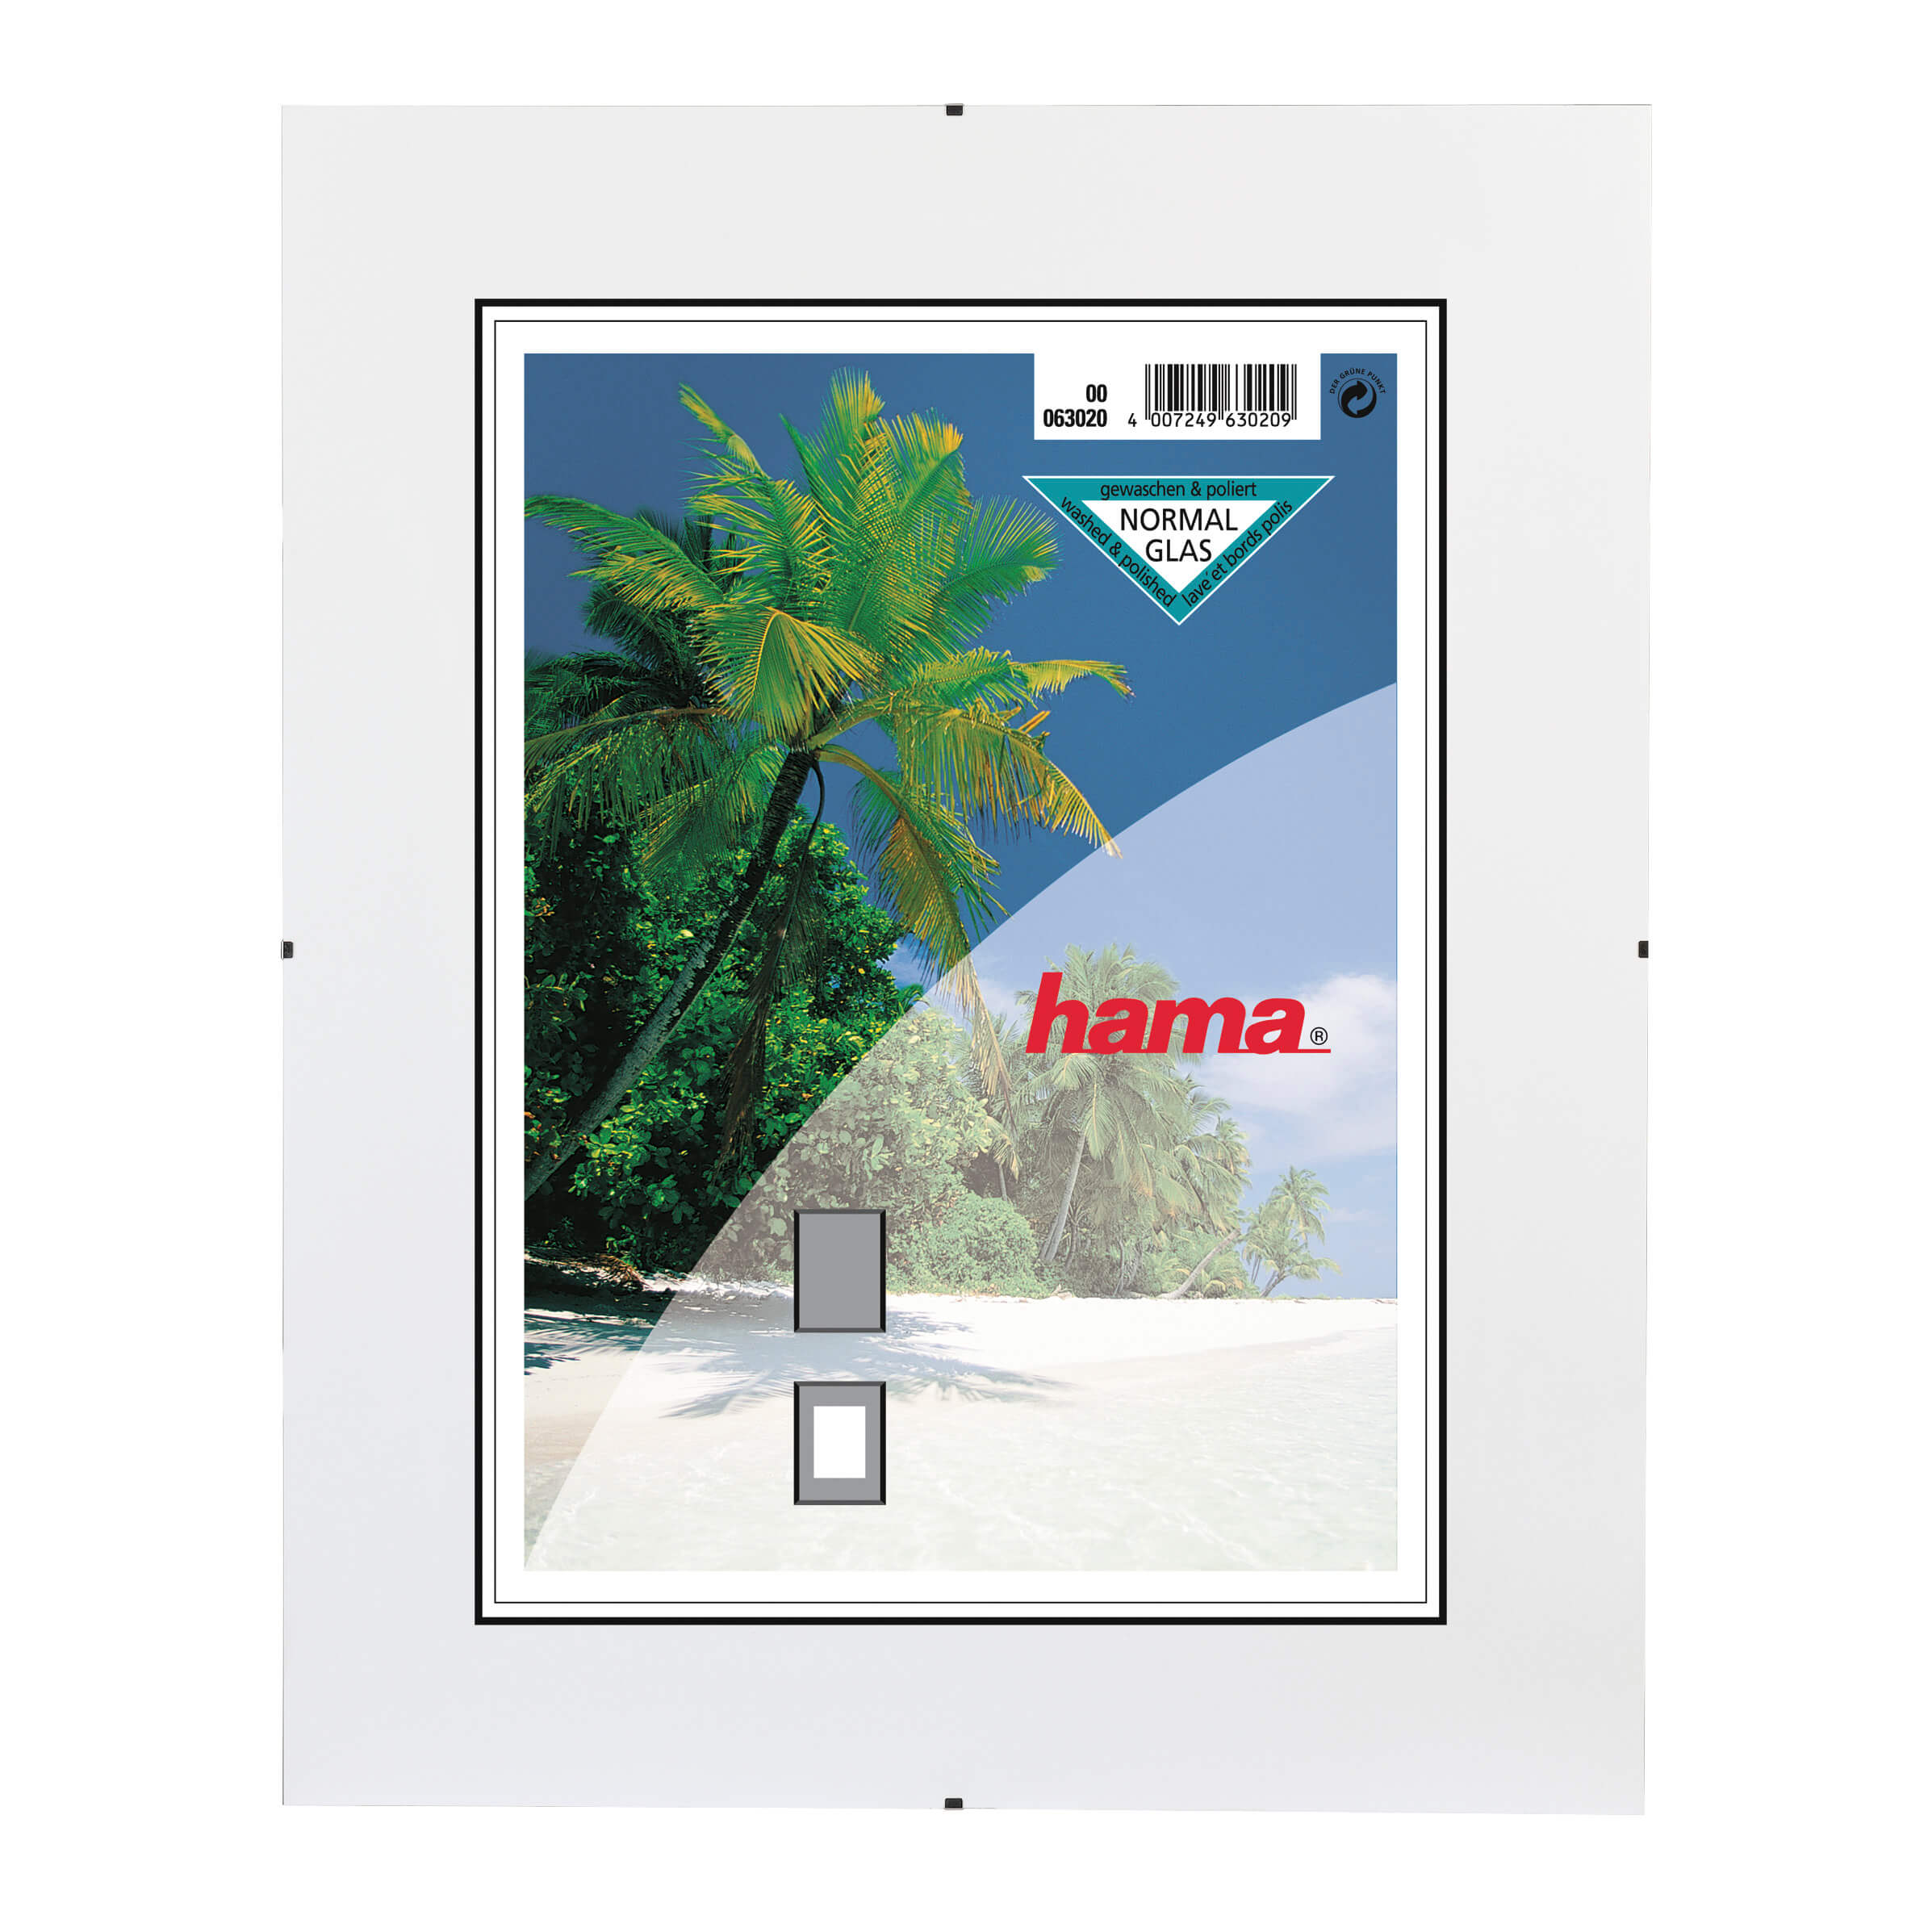 HAMA Clip-Fix Frameless Picture Ho lder, normal glass, 21 x 29.7 